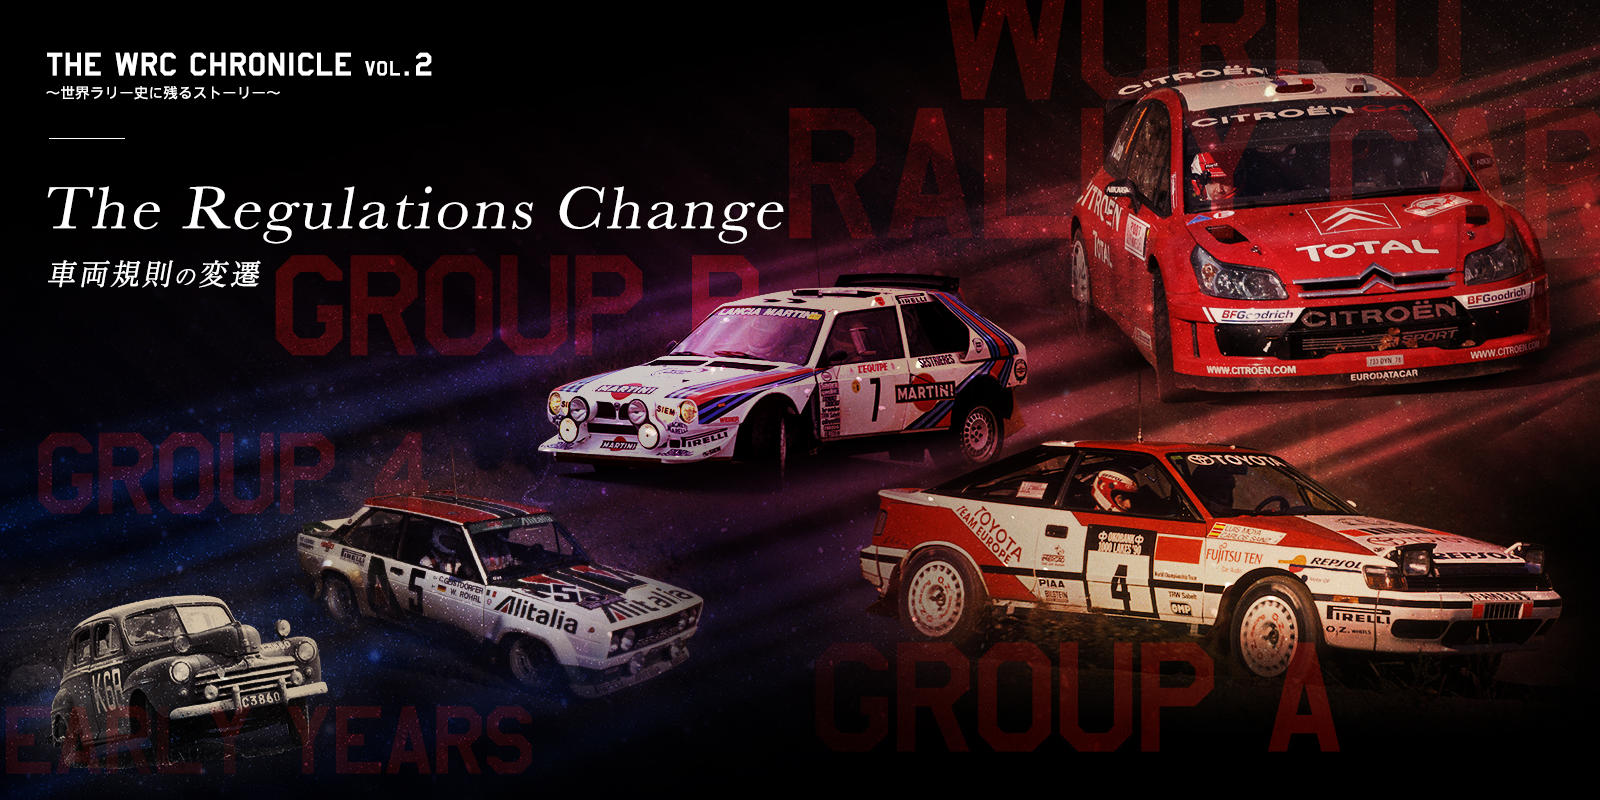 The WRC Chronicle vol.2 - The regulations change